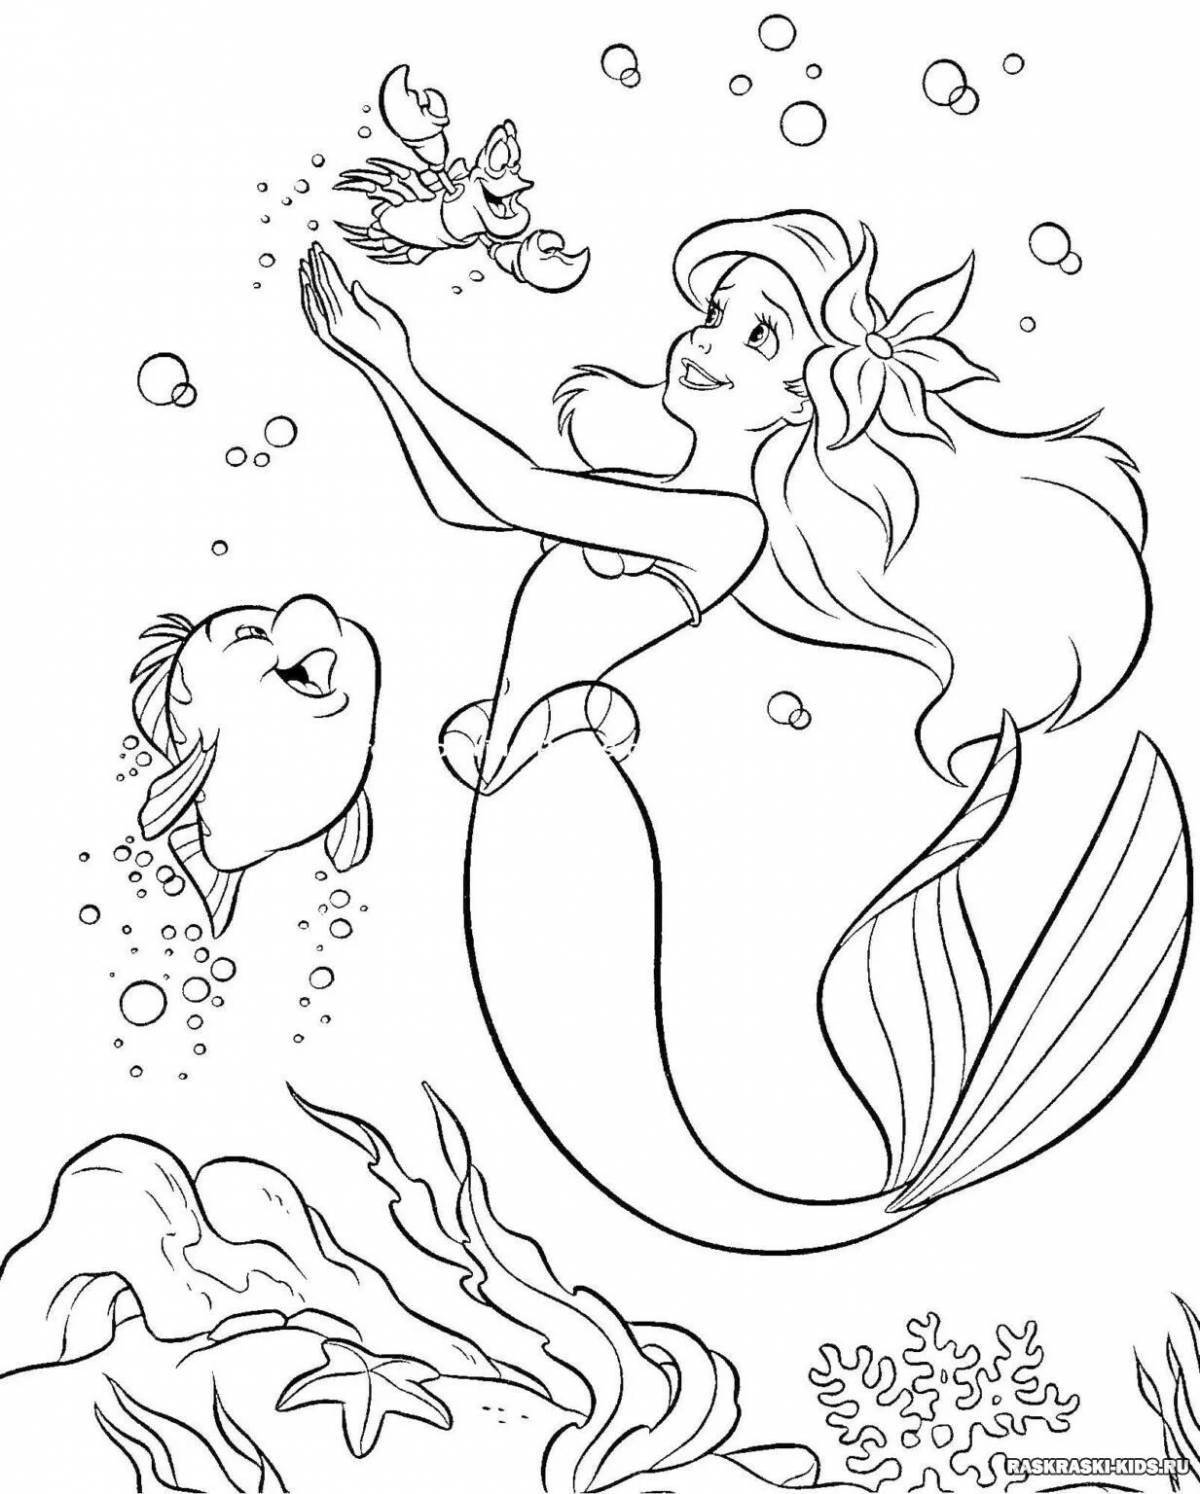 Coloring playful little mermaid